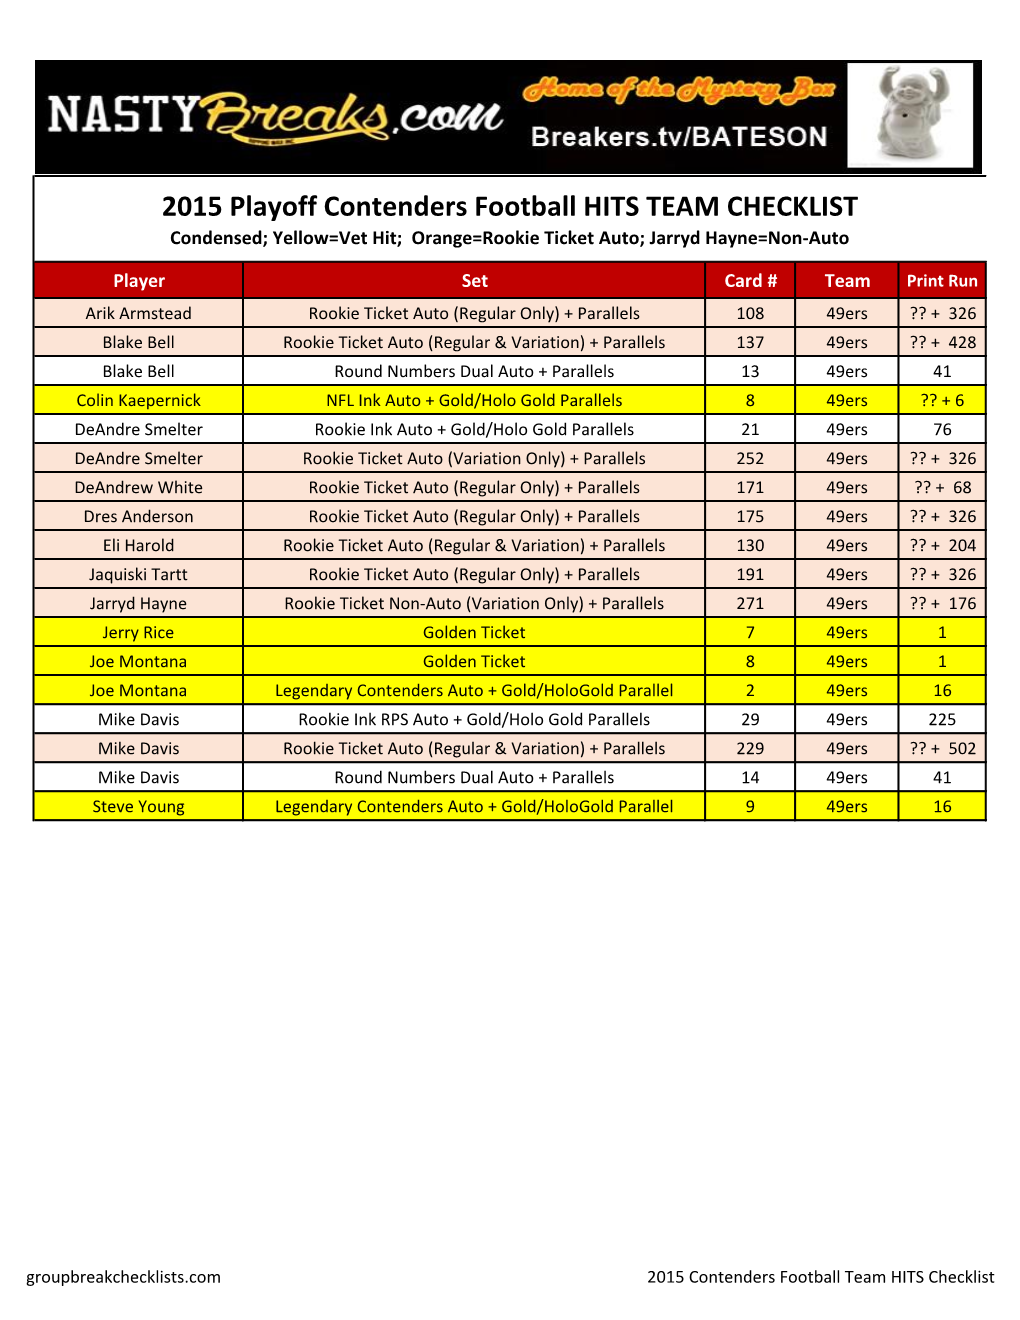 2015 Contenders Football Team Checklist;